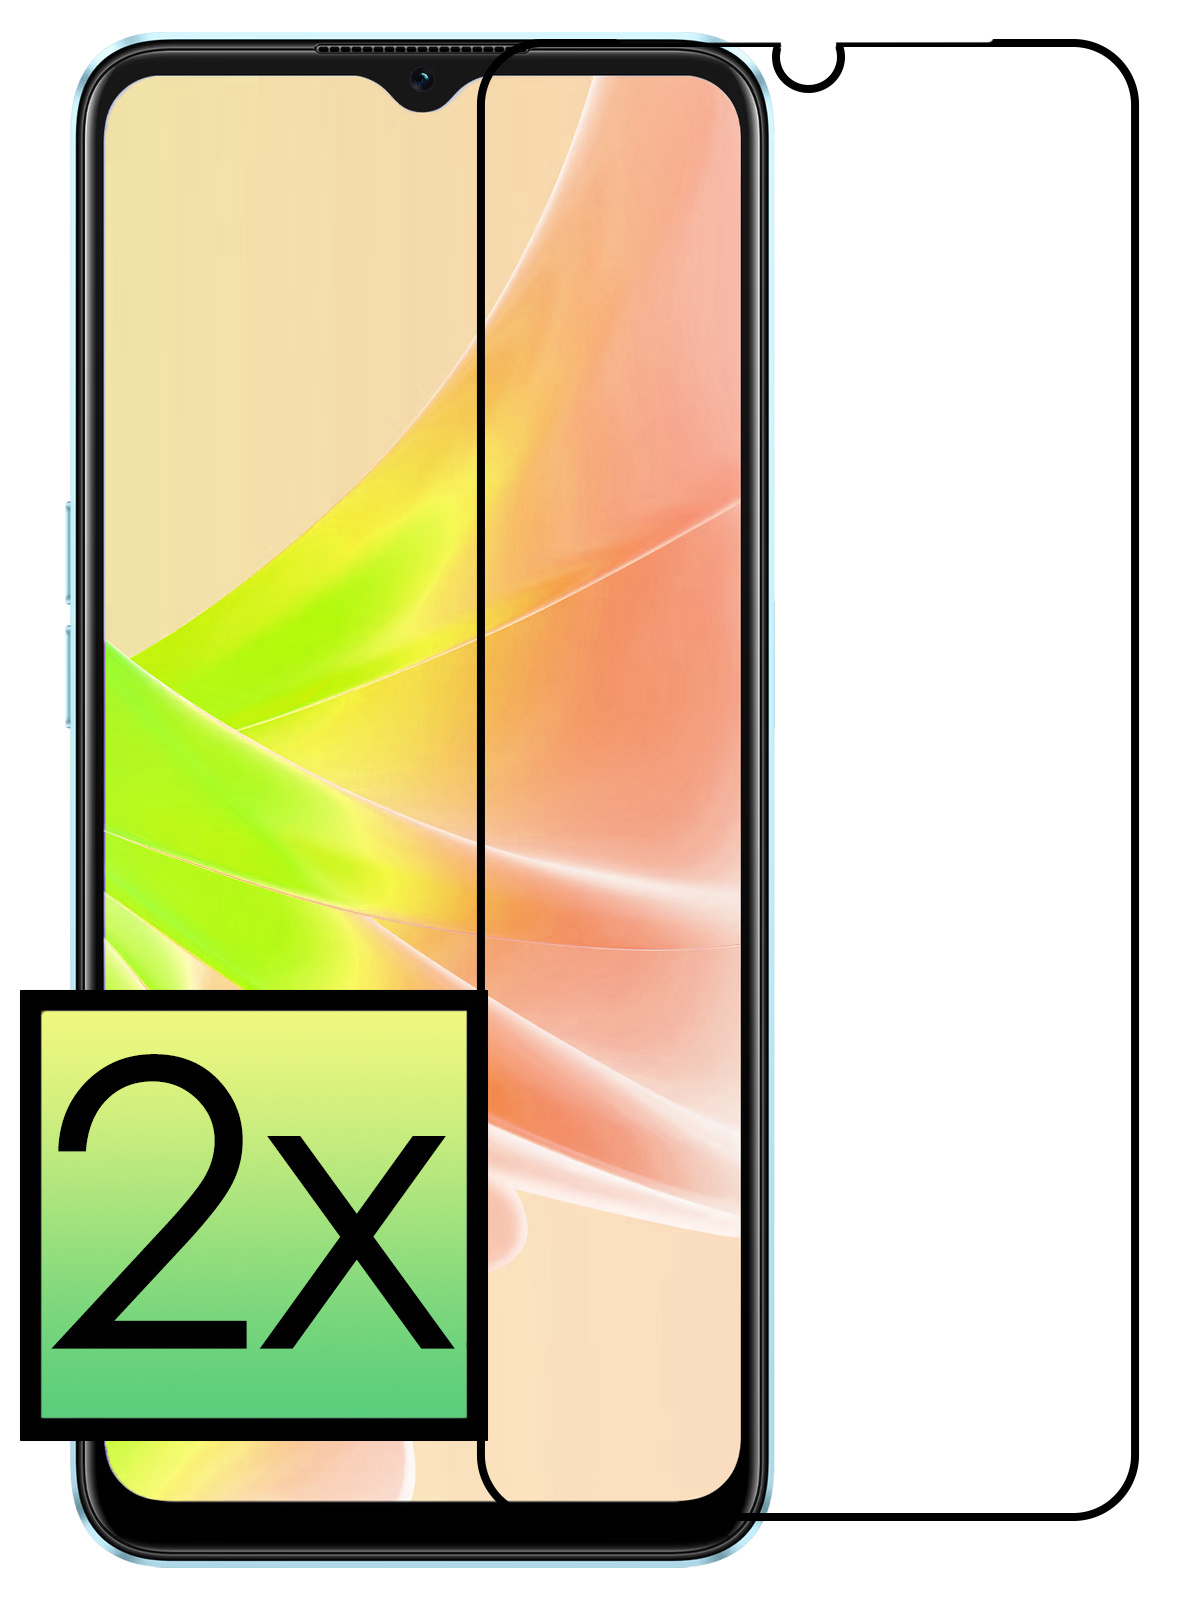 NoXx OPPO A57 Screenprotector Tempered Glass Full Cover Gehard Glas Beschermglas - 2x